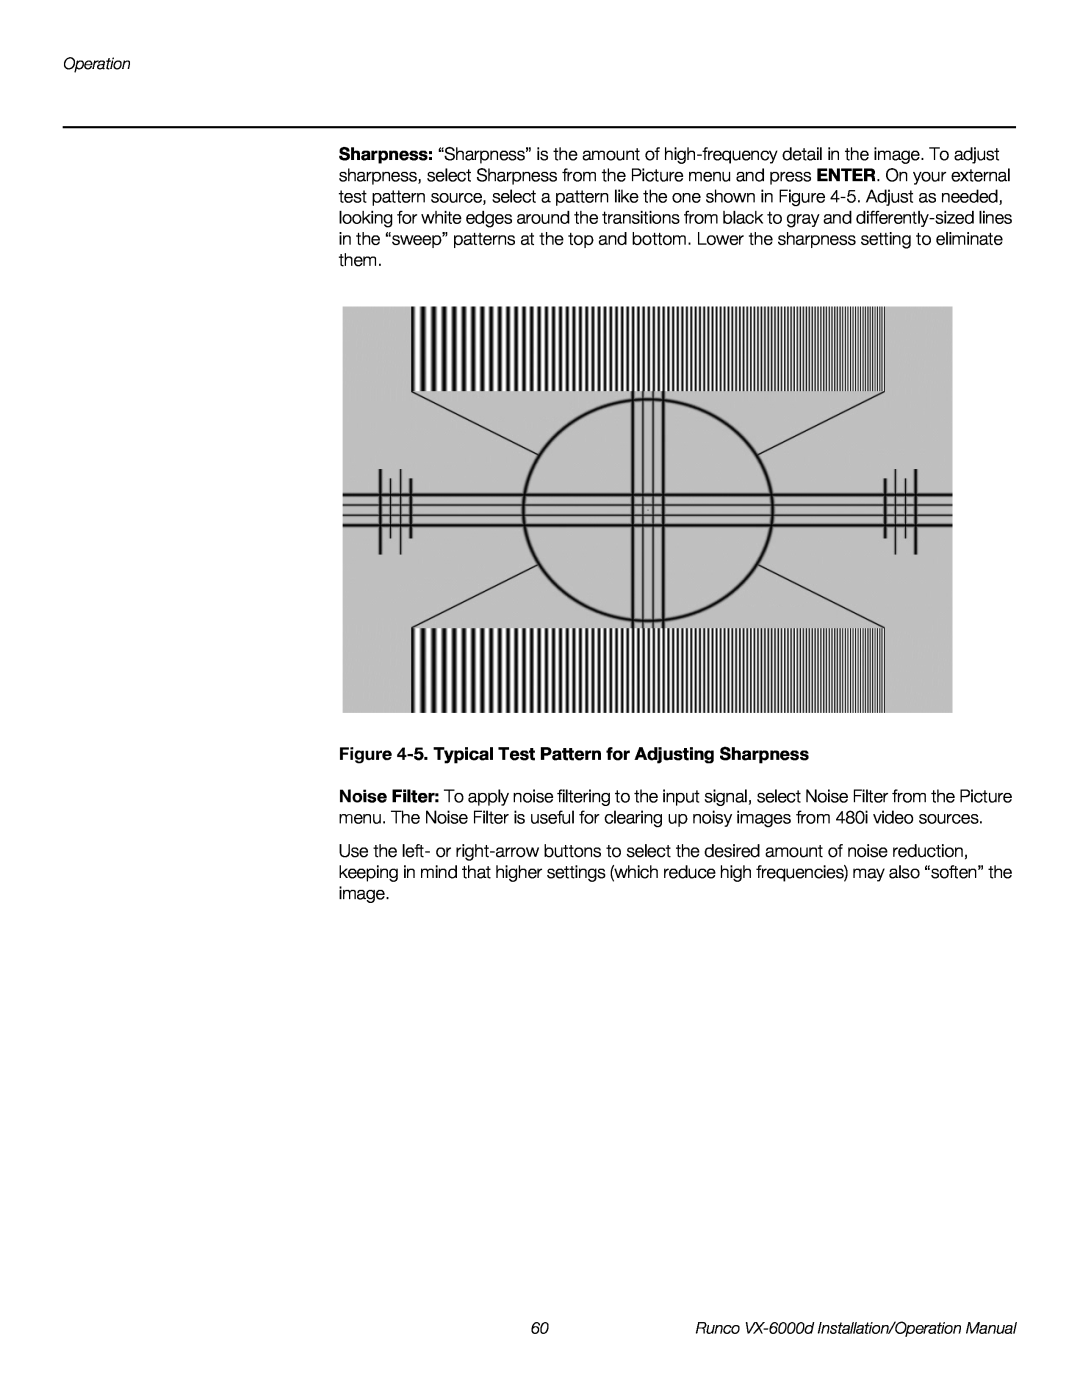 Runco VX-6000D operation manual 5. Typical Test Pattern for Adjusting Sharpness 